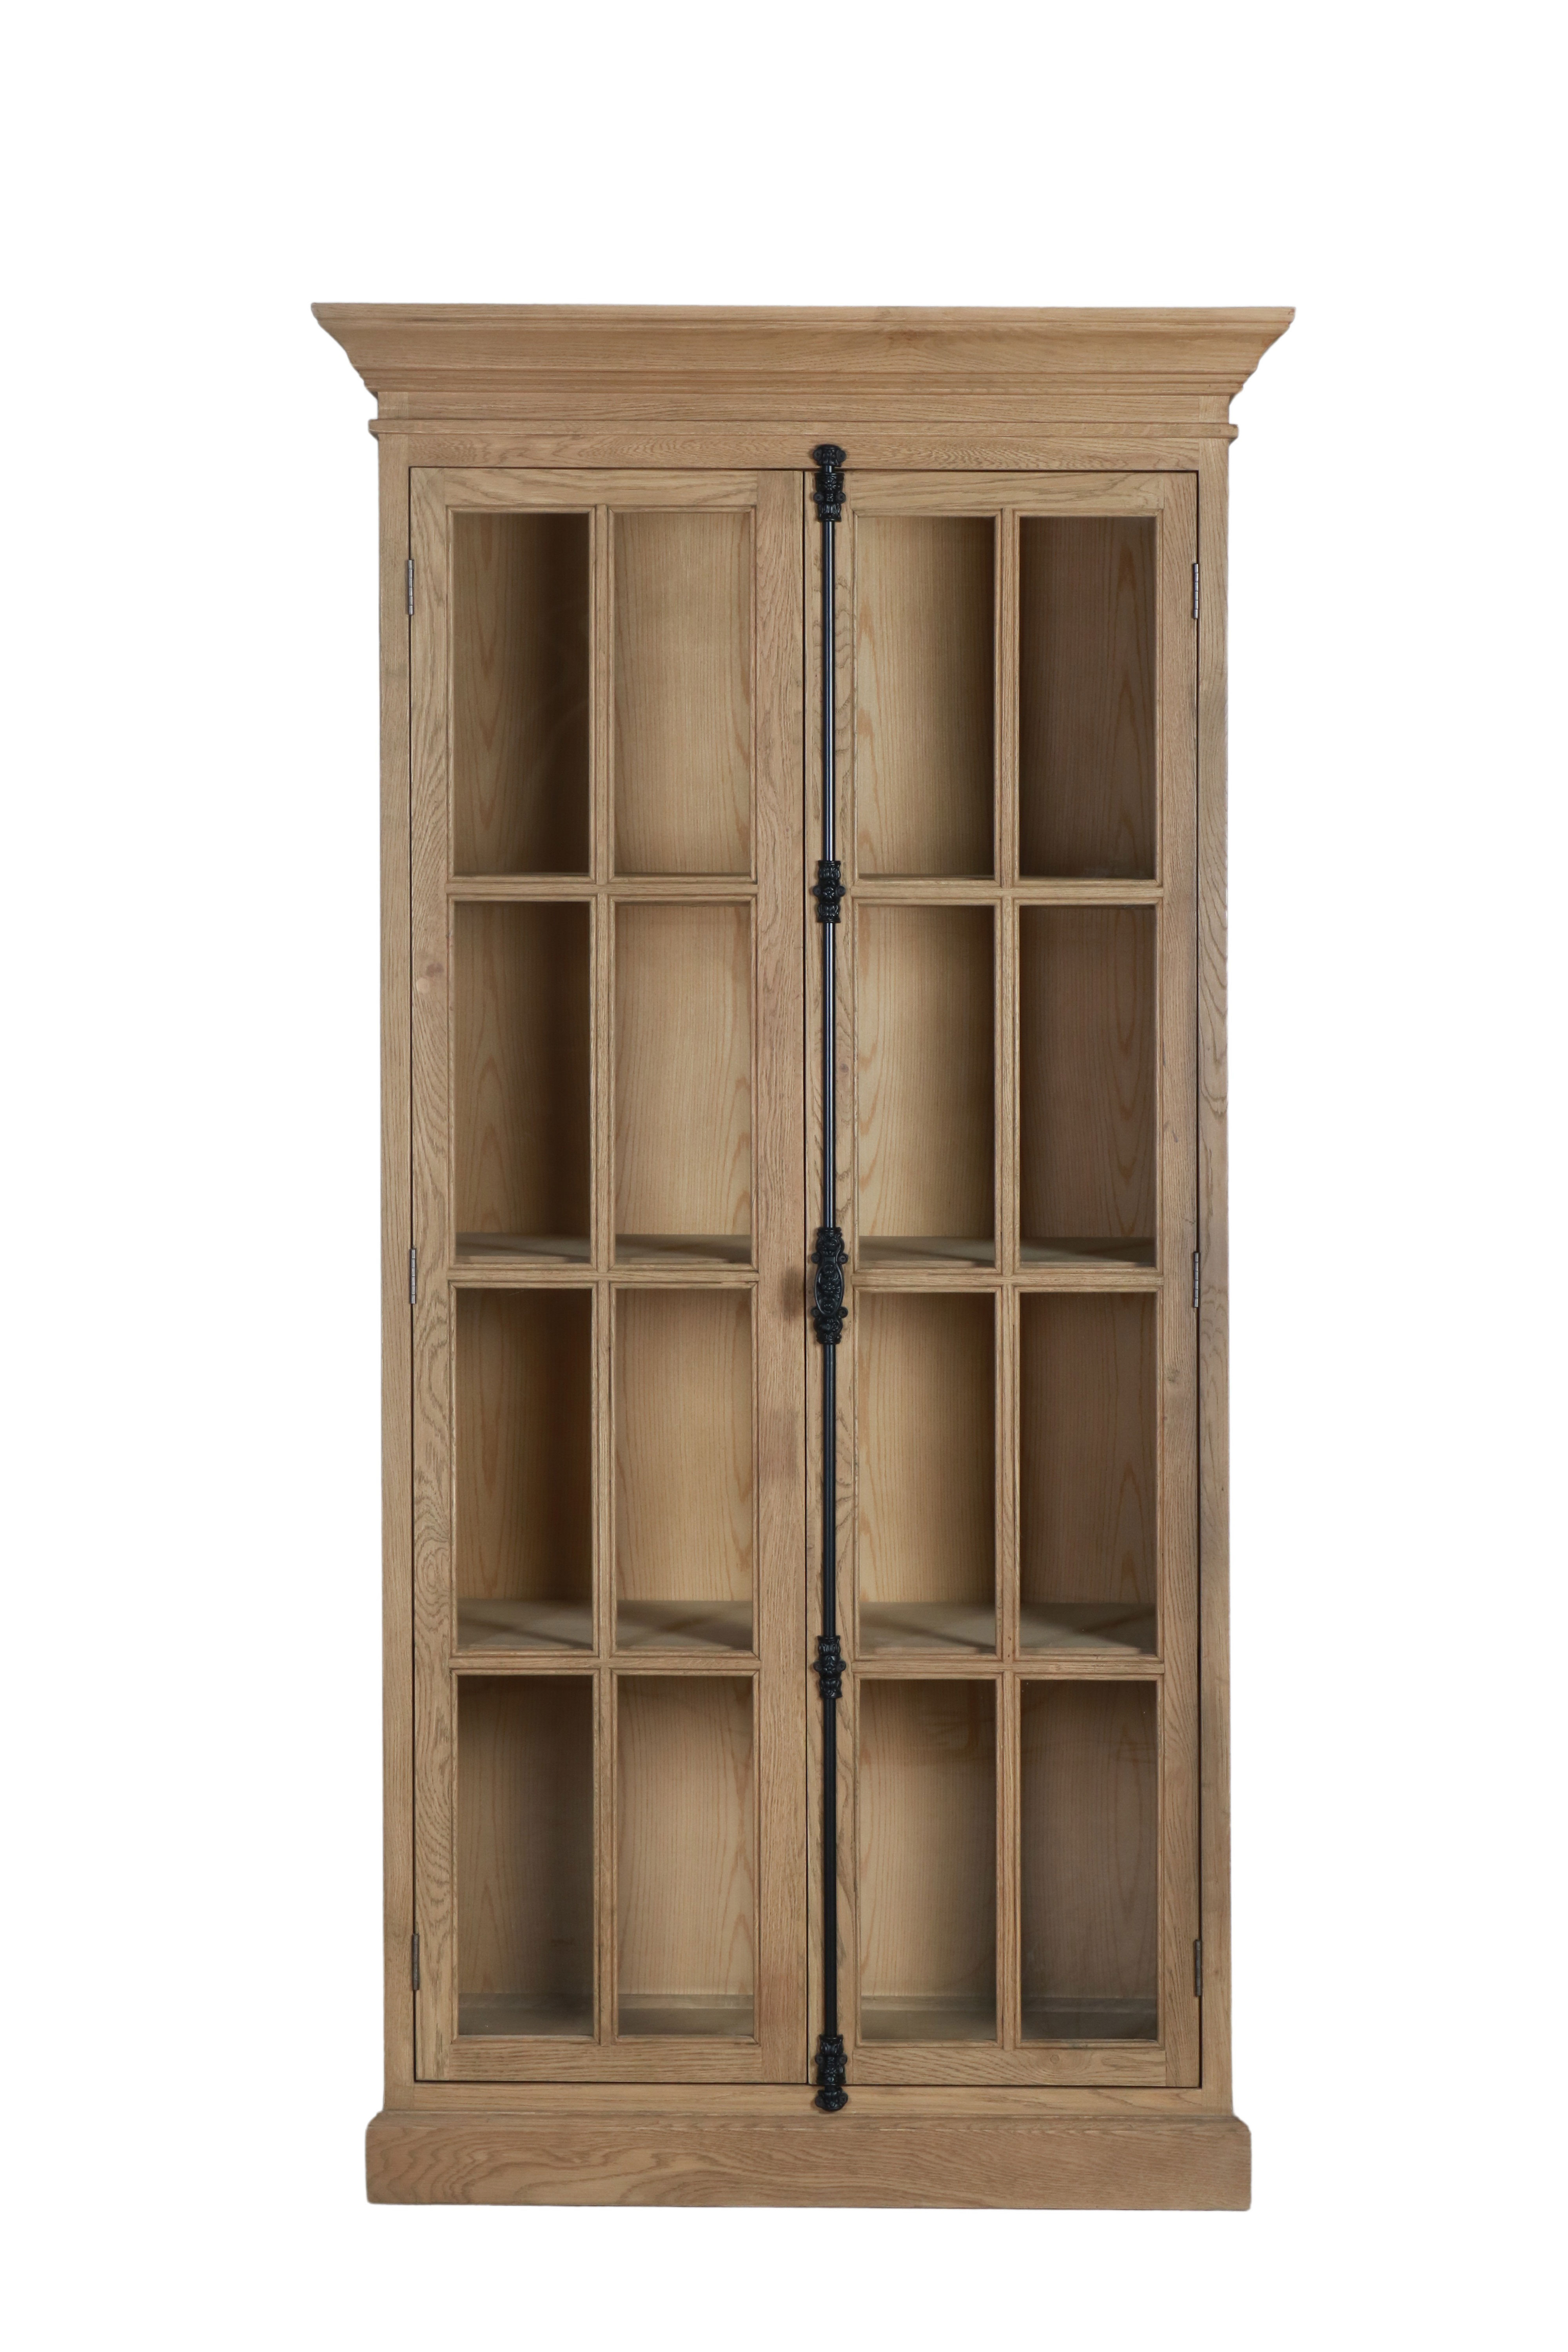 Oak display cabinet with glass doors